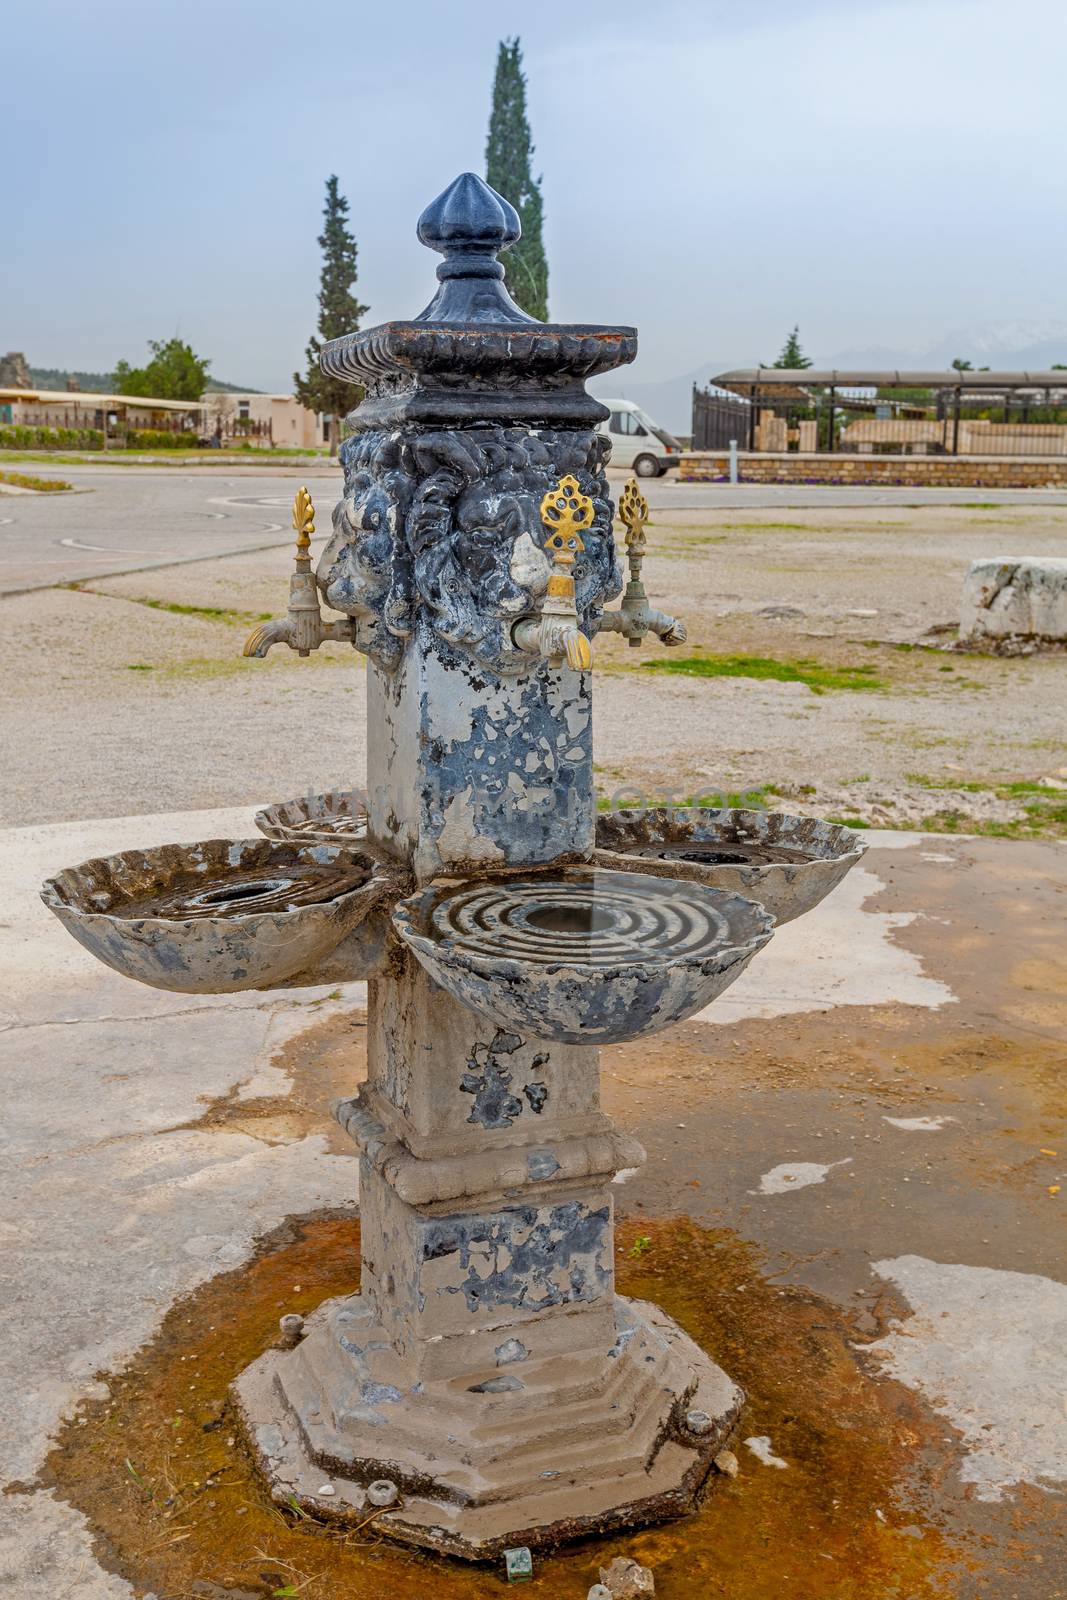 Ancient decorative turkish tap. by igor_stramyk